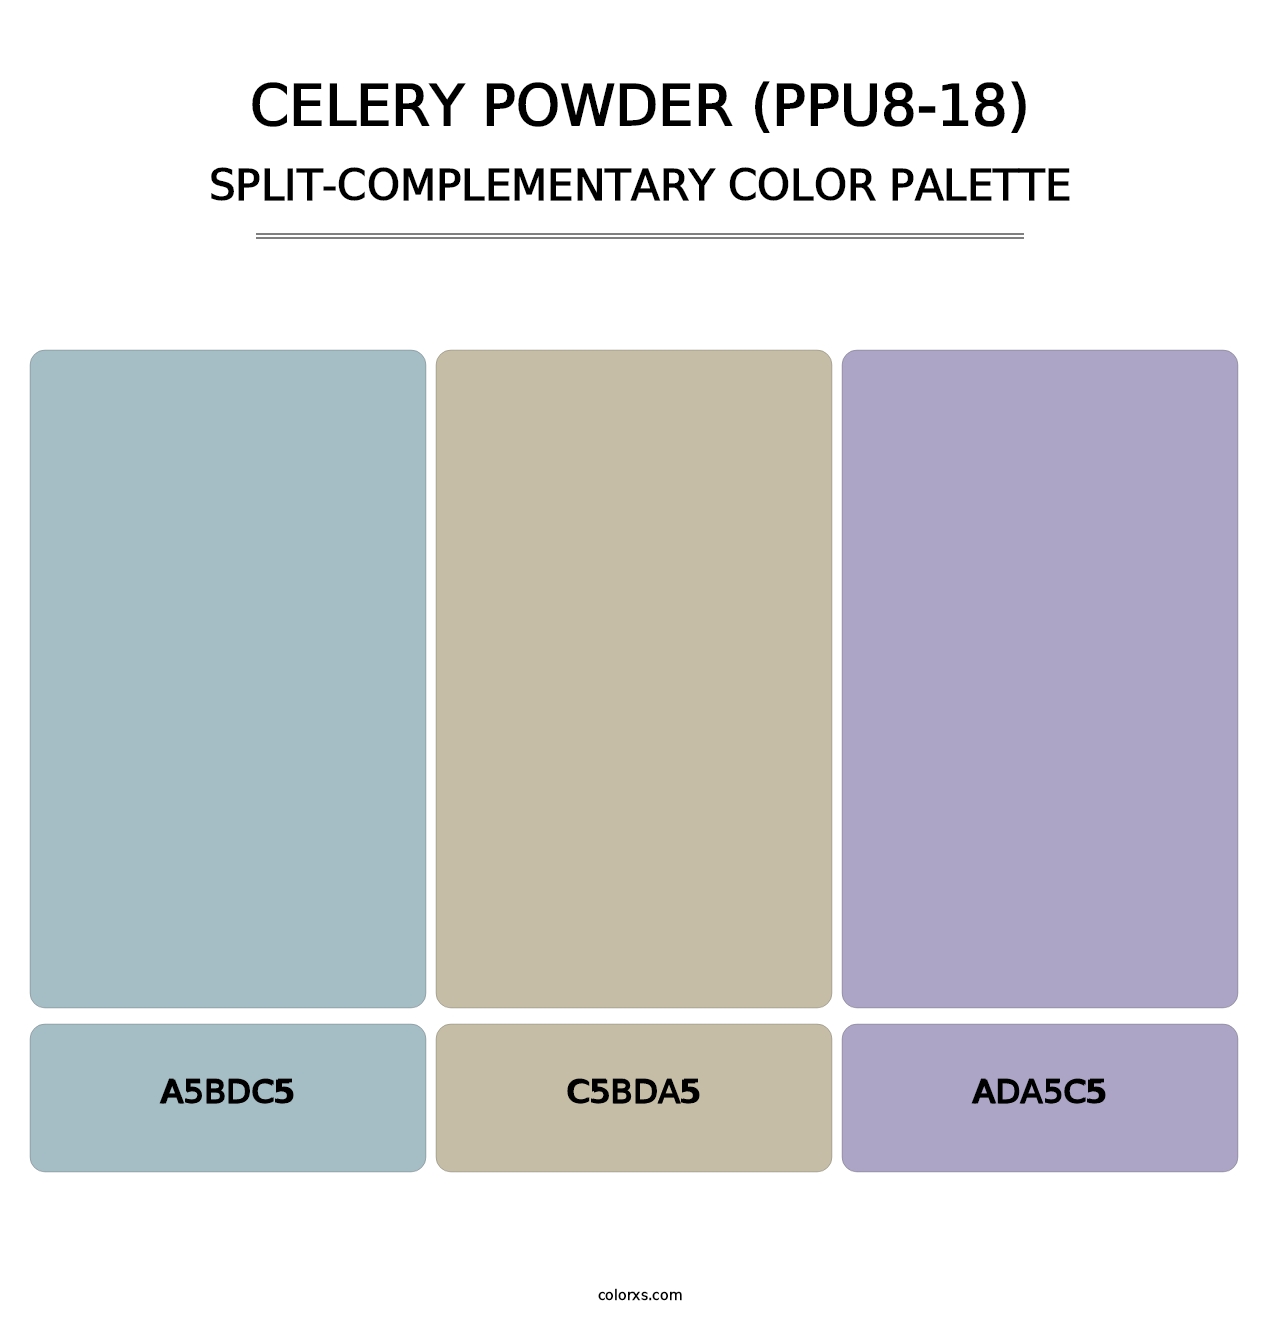 Celery Powder (PPU8-18) - Split-Complementary Color Palette